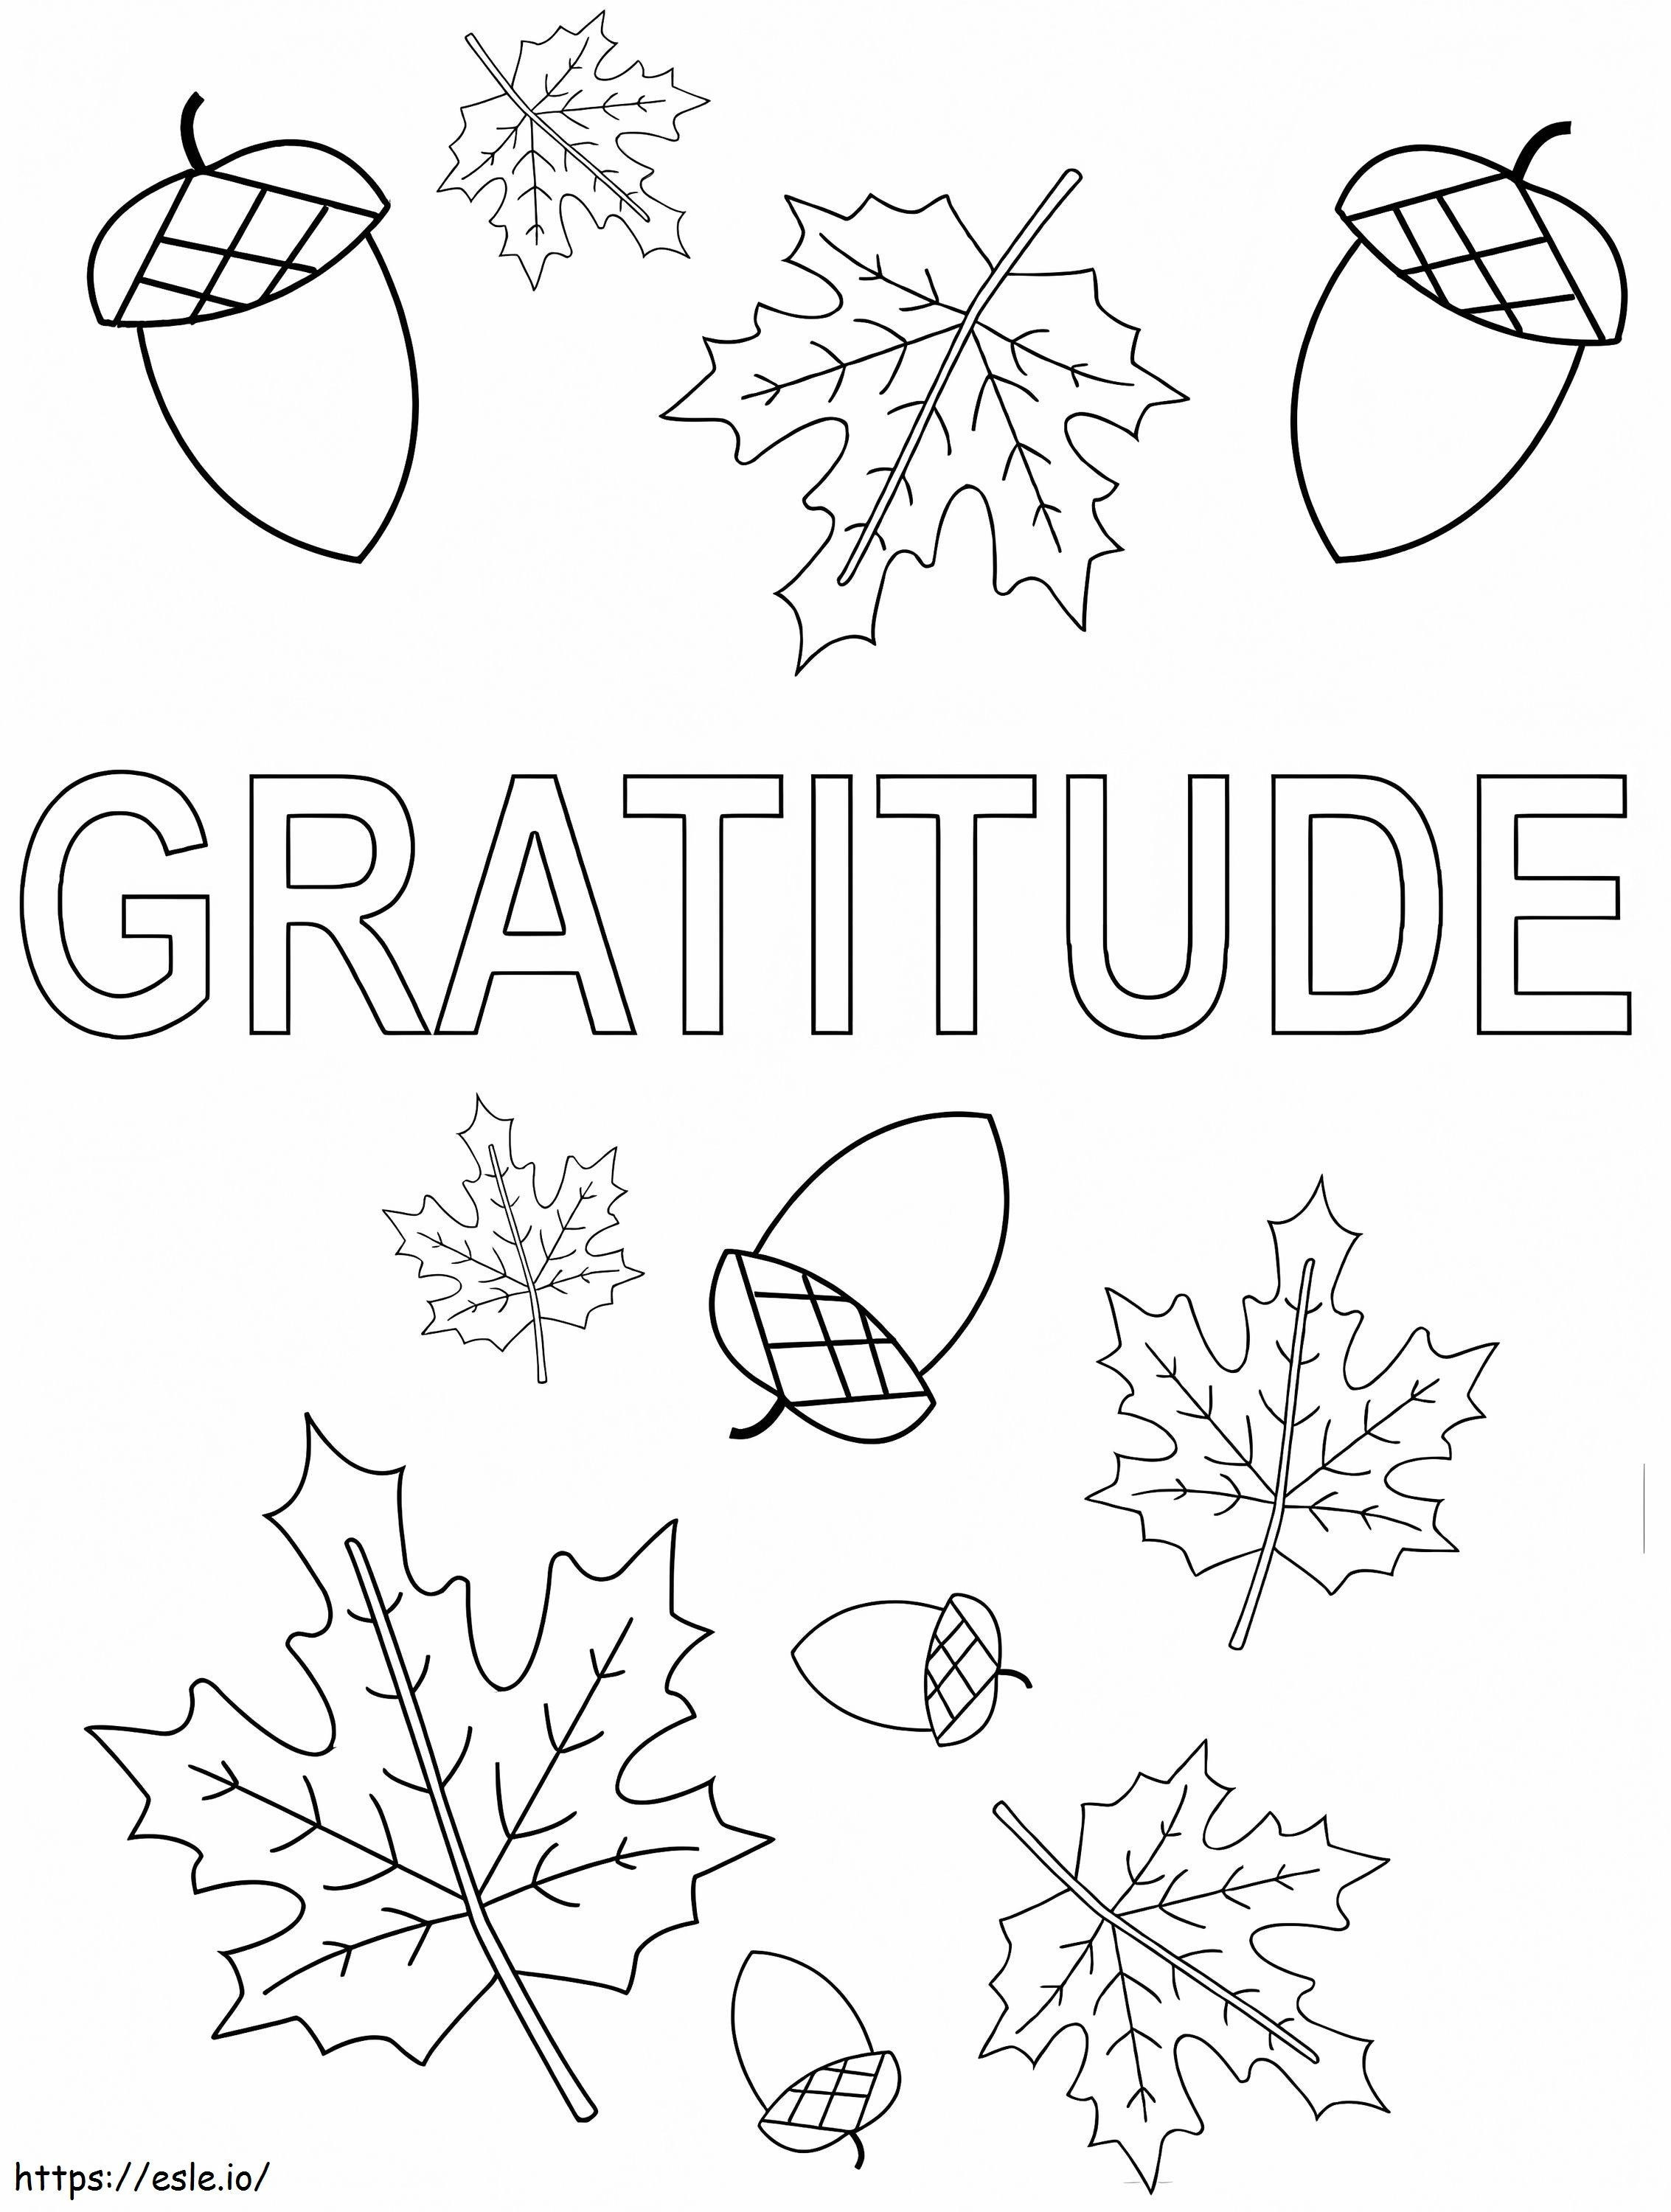 Print Gratitude coloring page